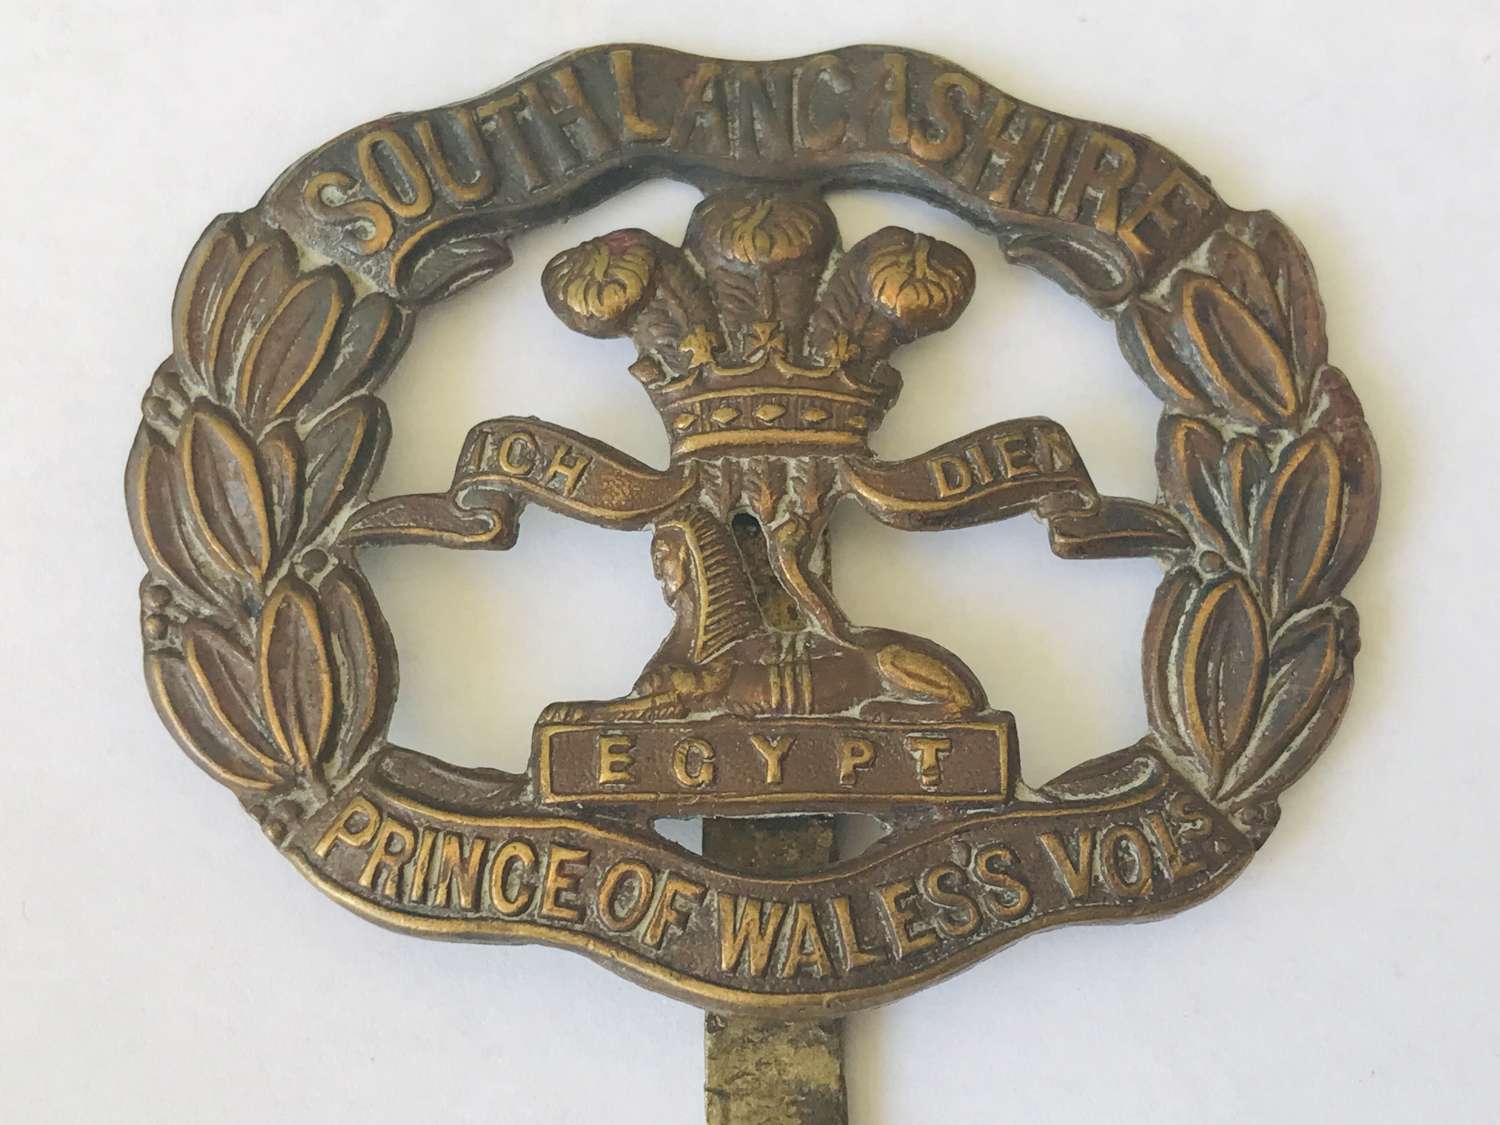 South Lancashire( Prince of Wales volunteers)cap badge